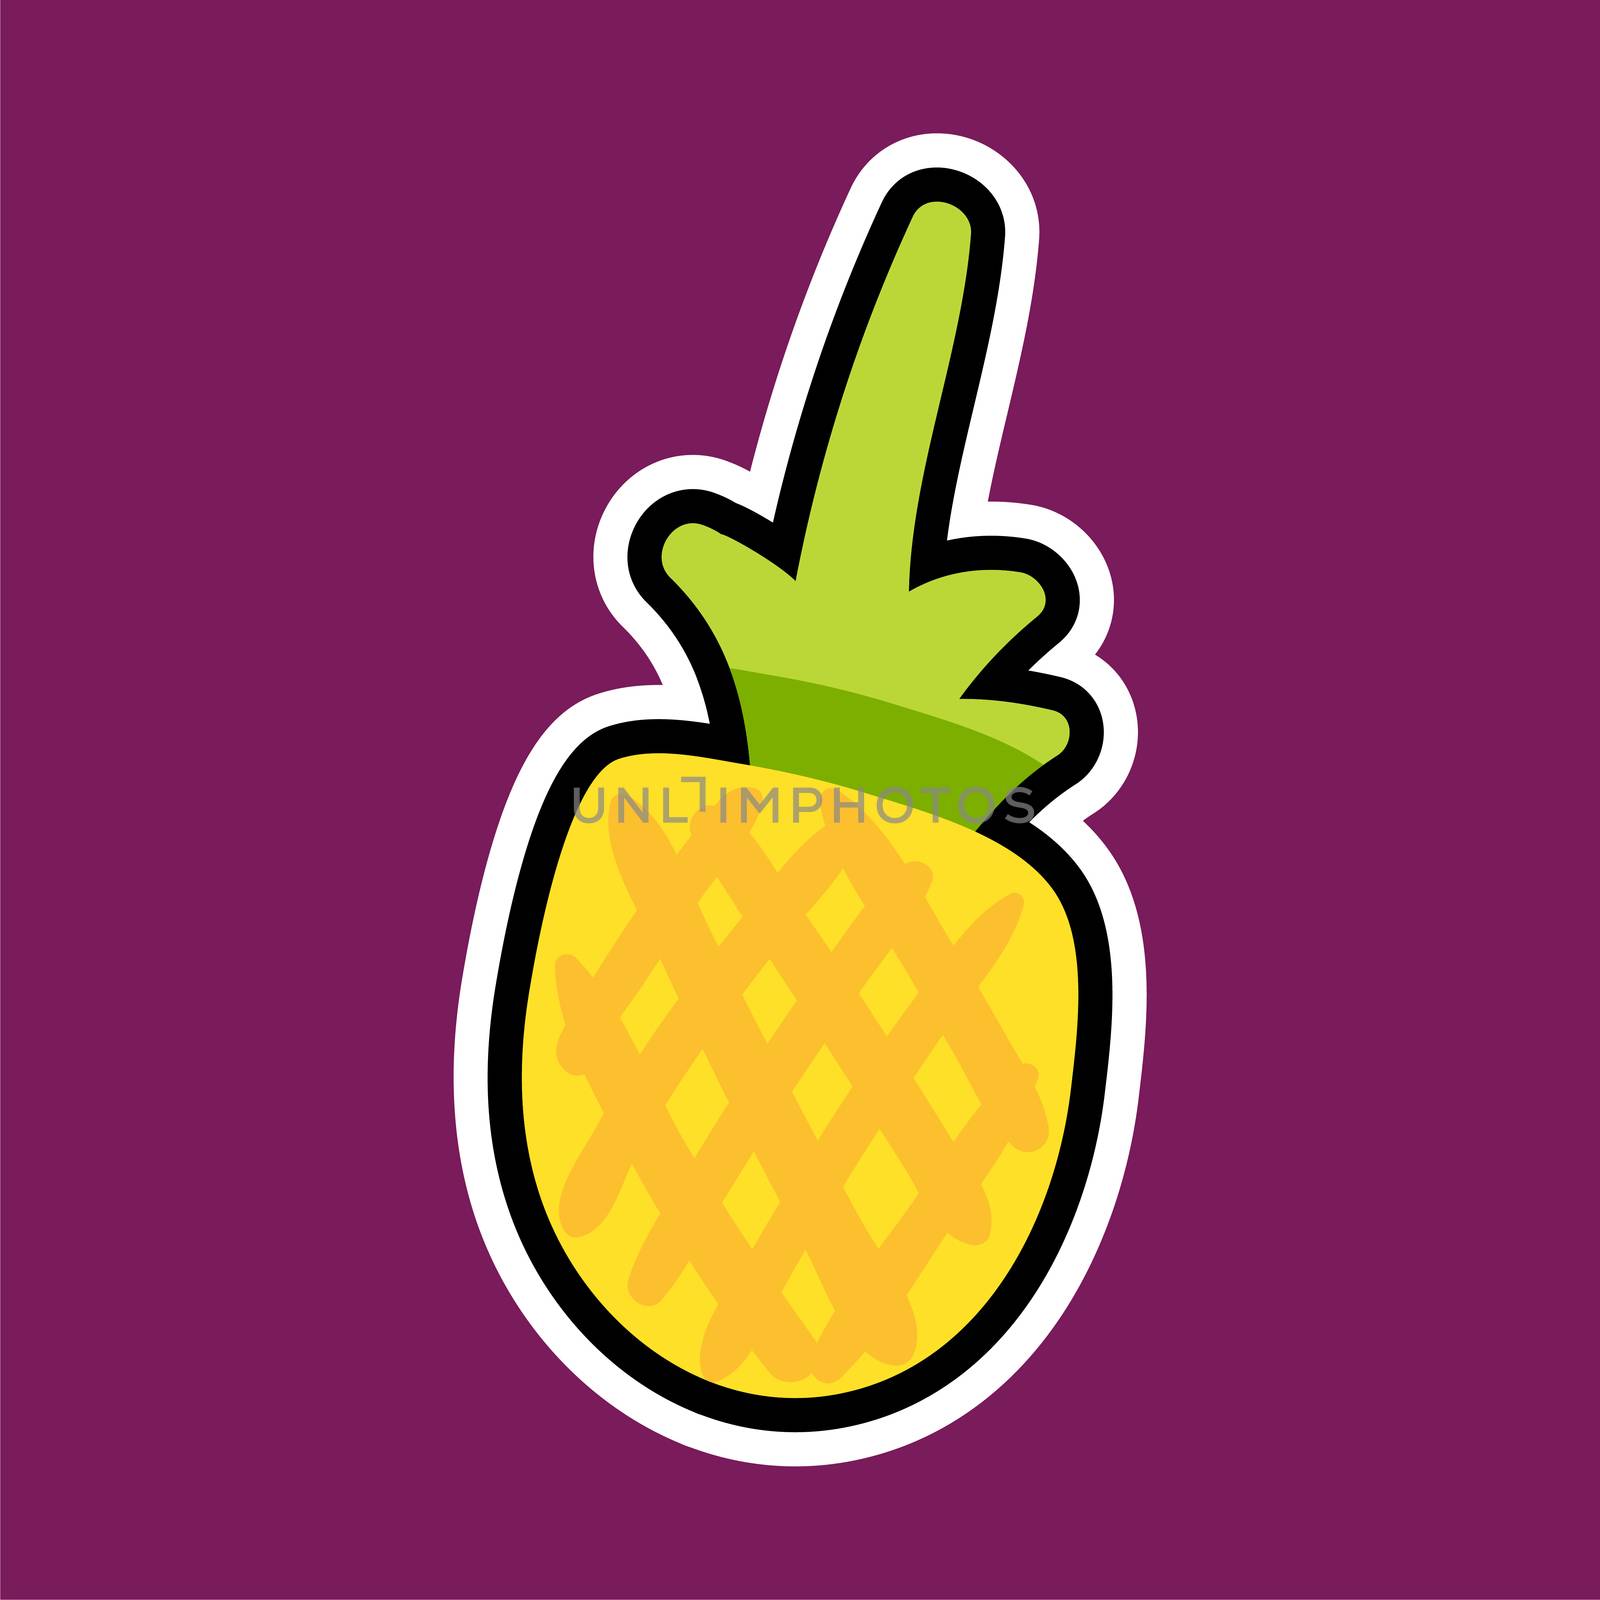 Pineapple cartoon sticker. by barsrsind